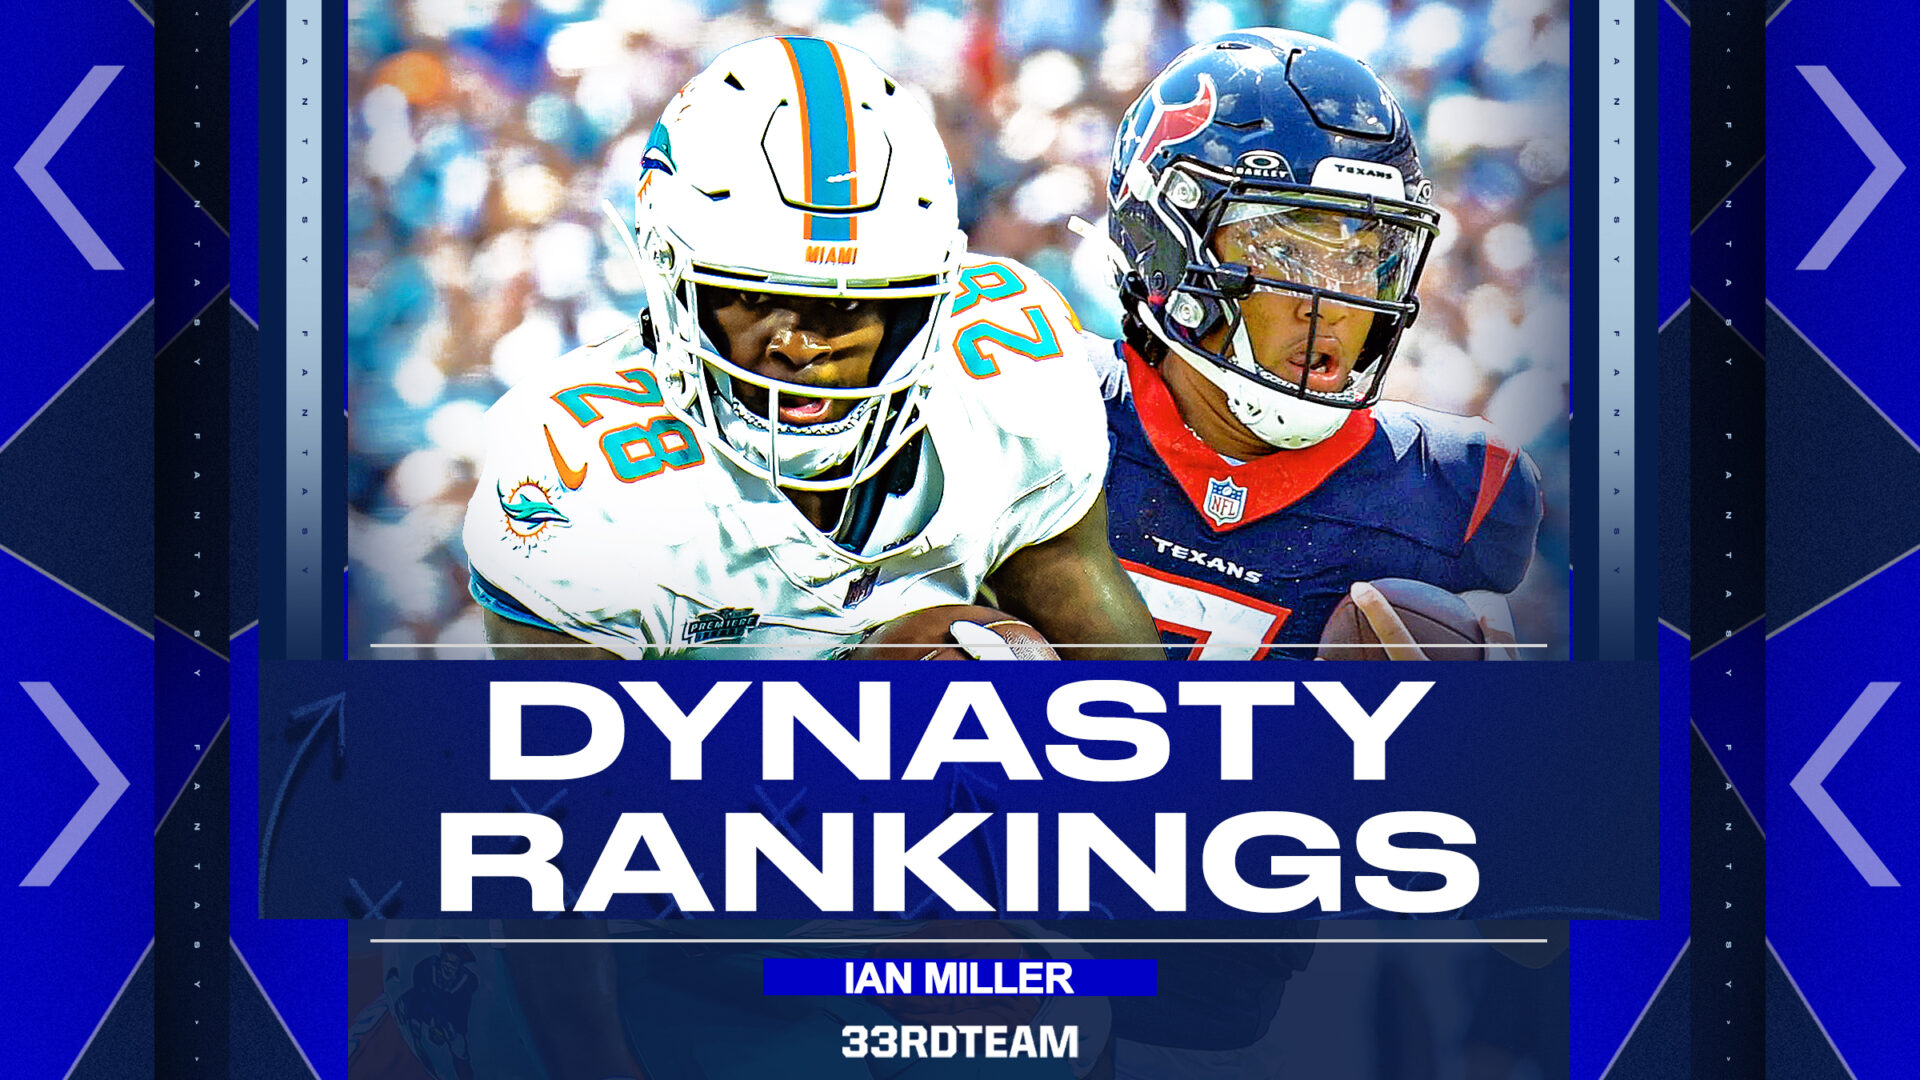 Top Dynasty QB Rankings for the 2021 NFL season